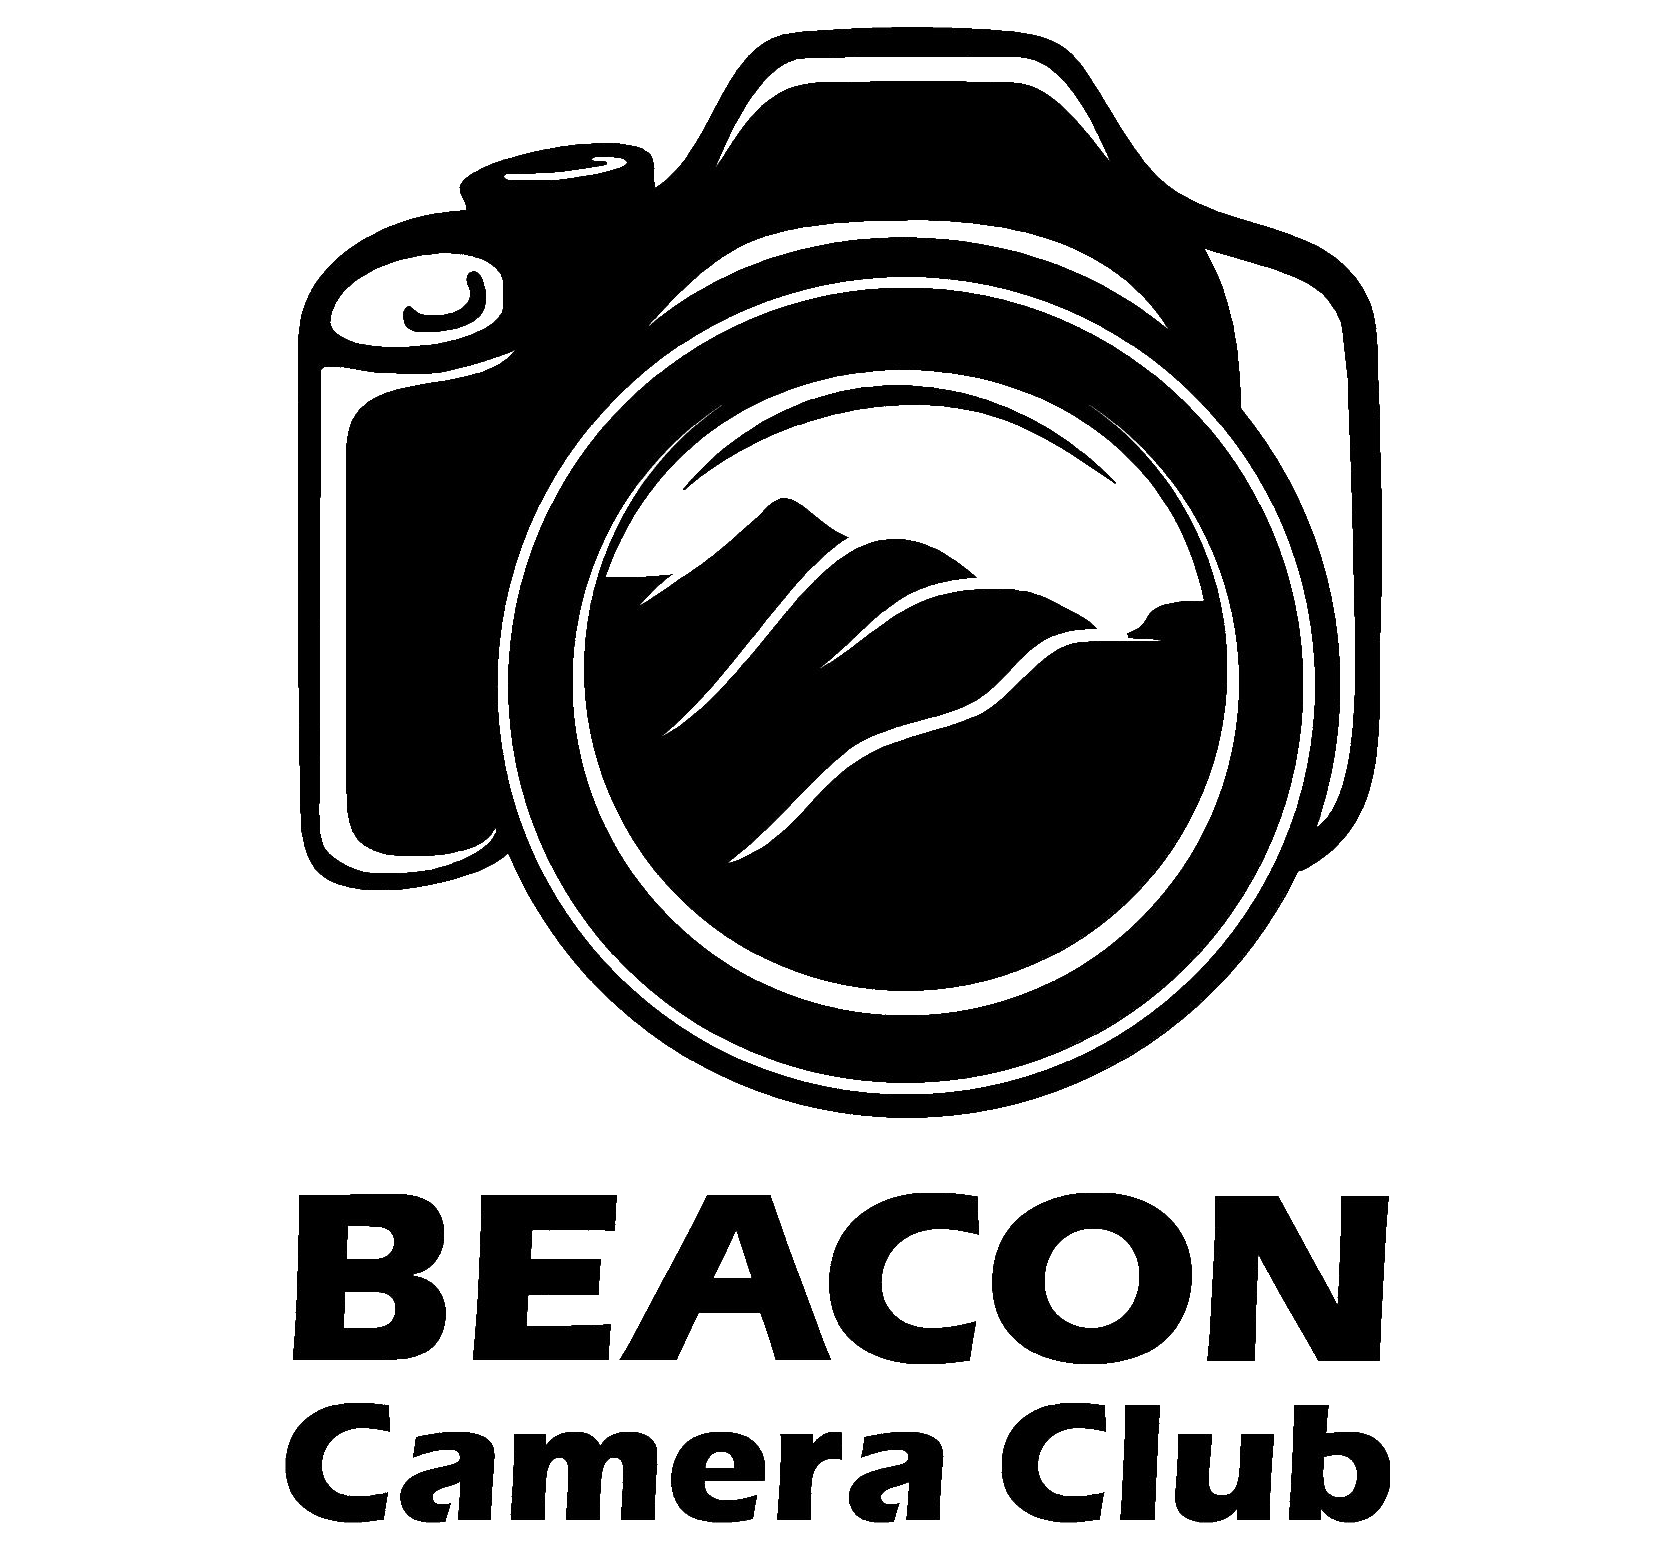 camera clip art for logo - photo #40